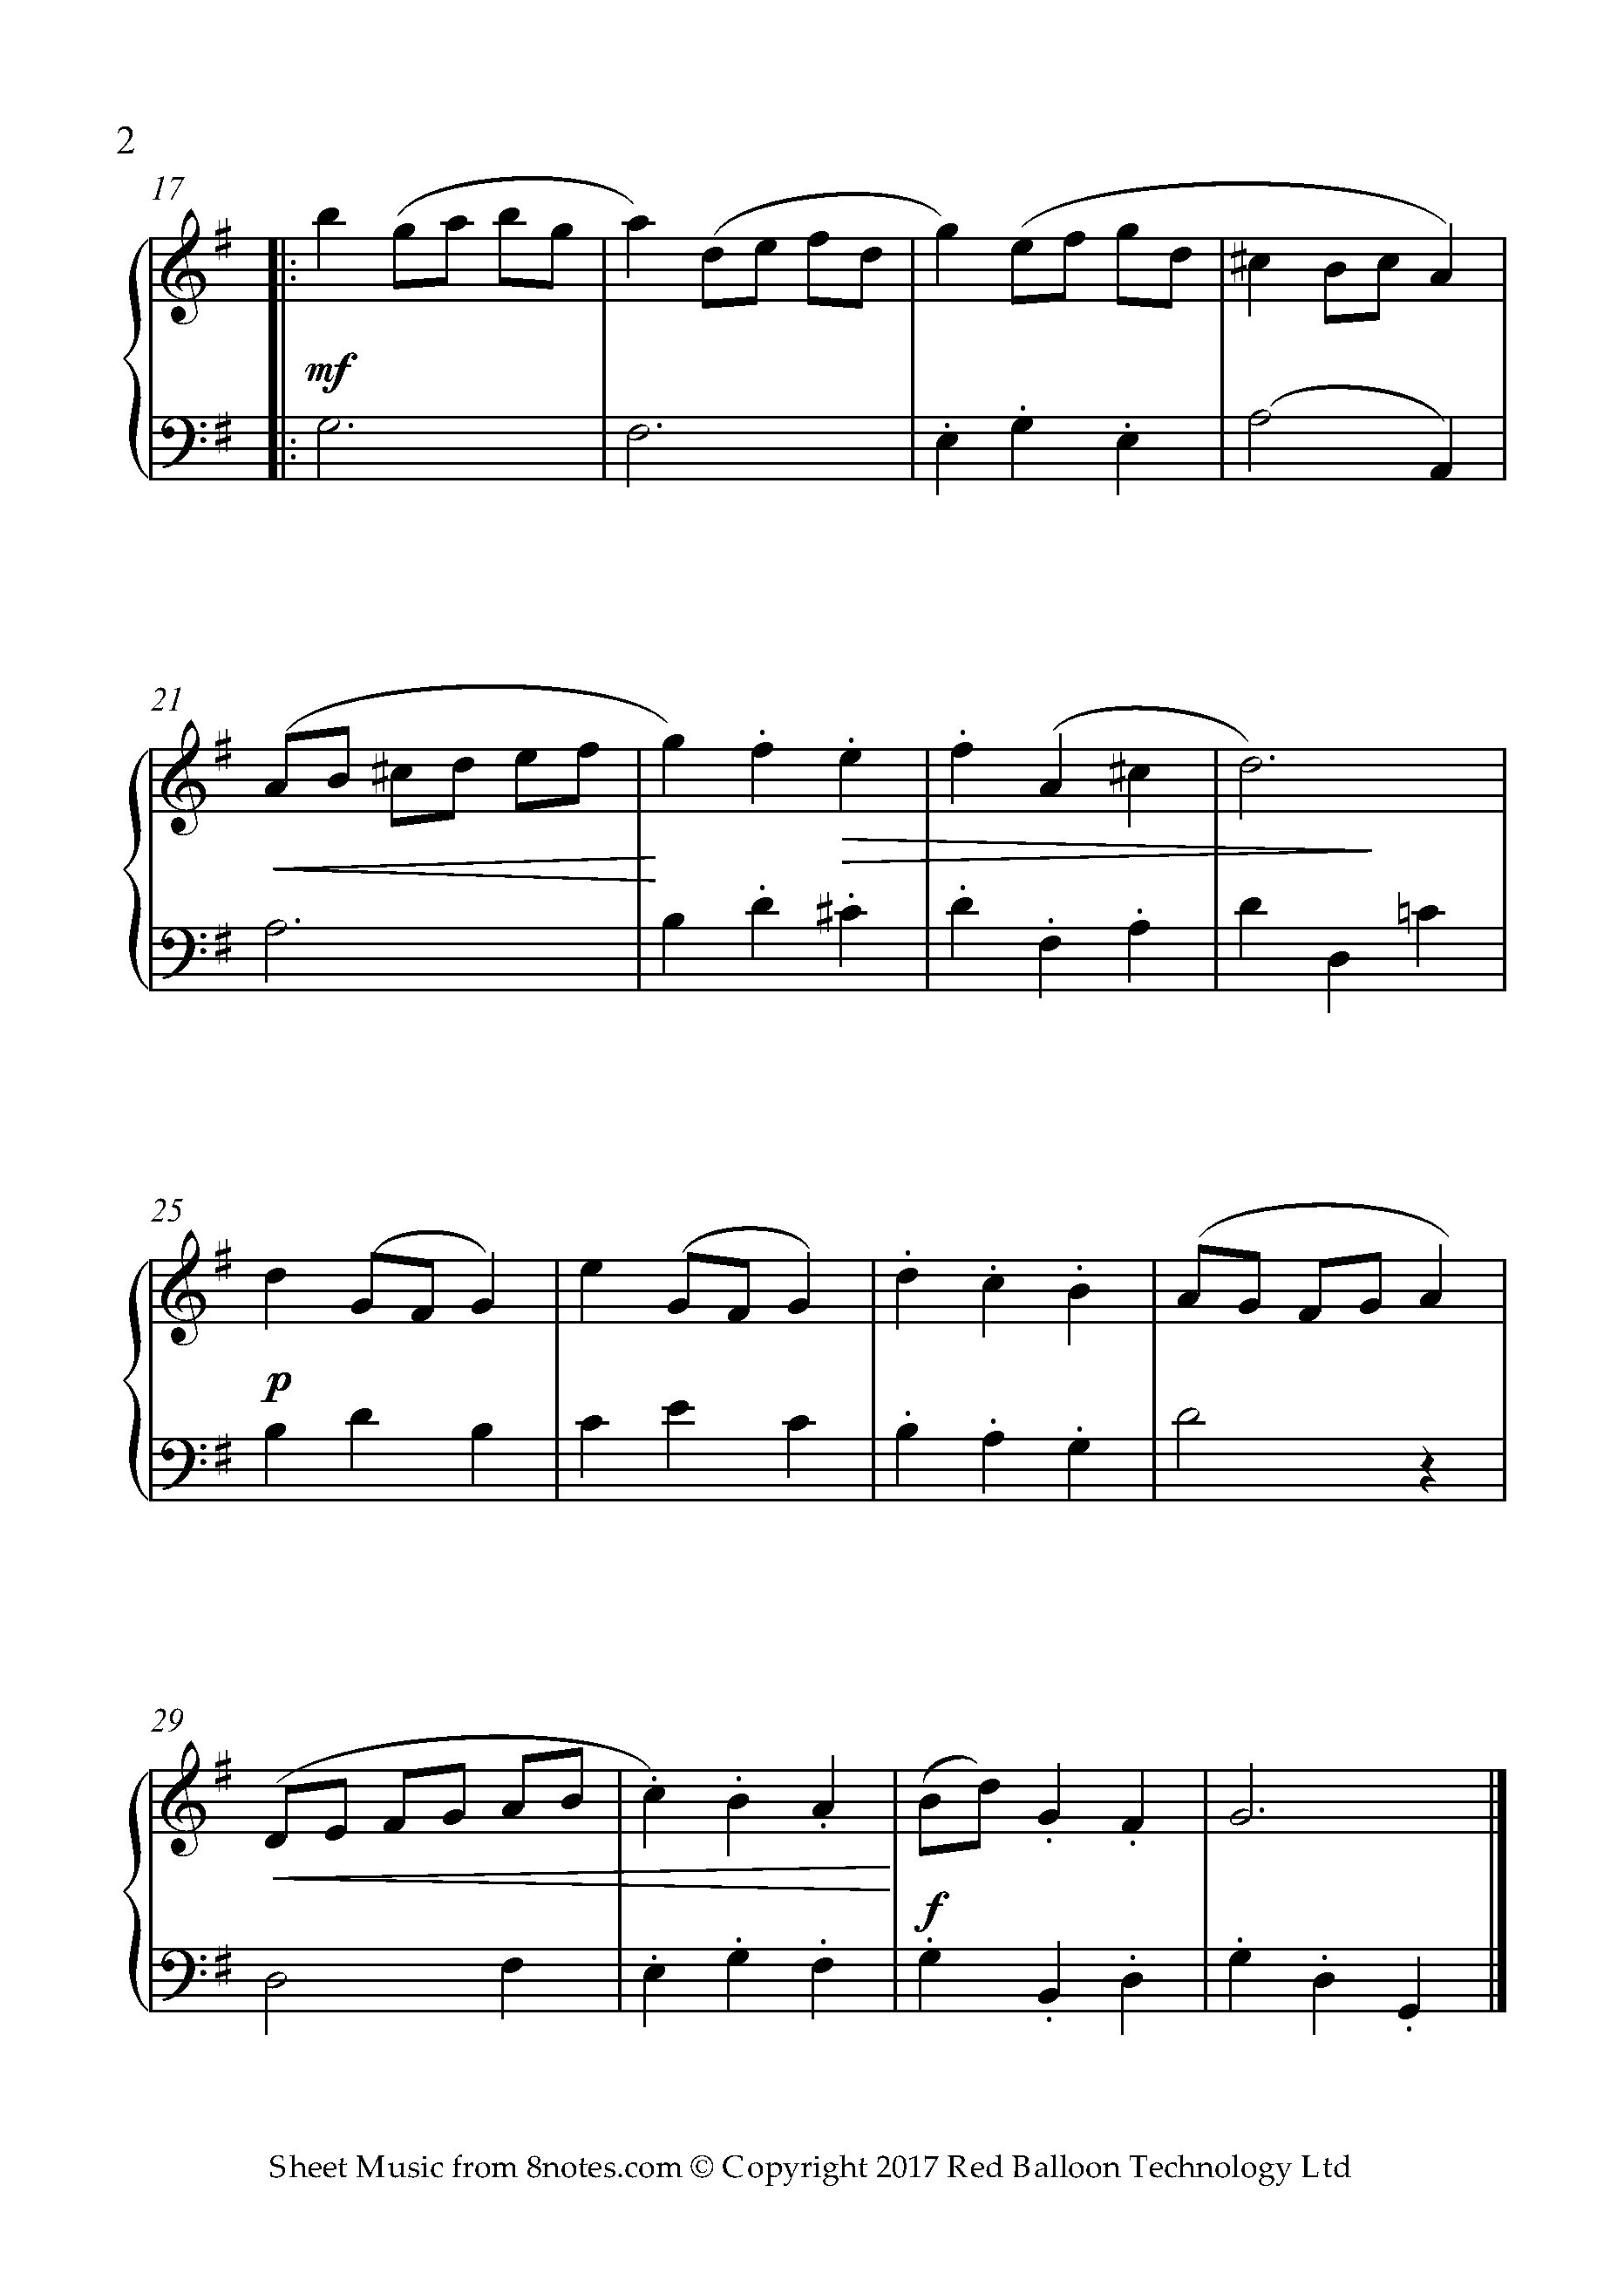 Bach - Minuet Sheet music for Piano - 8notes.com